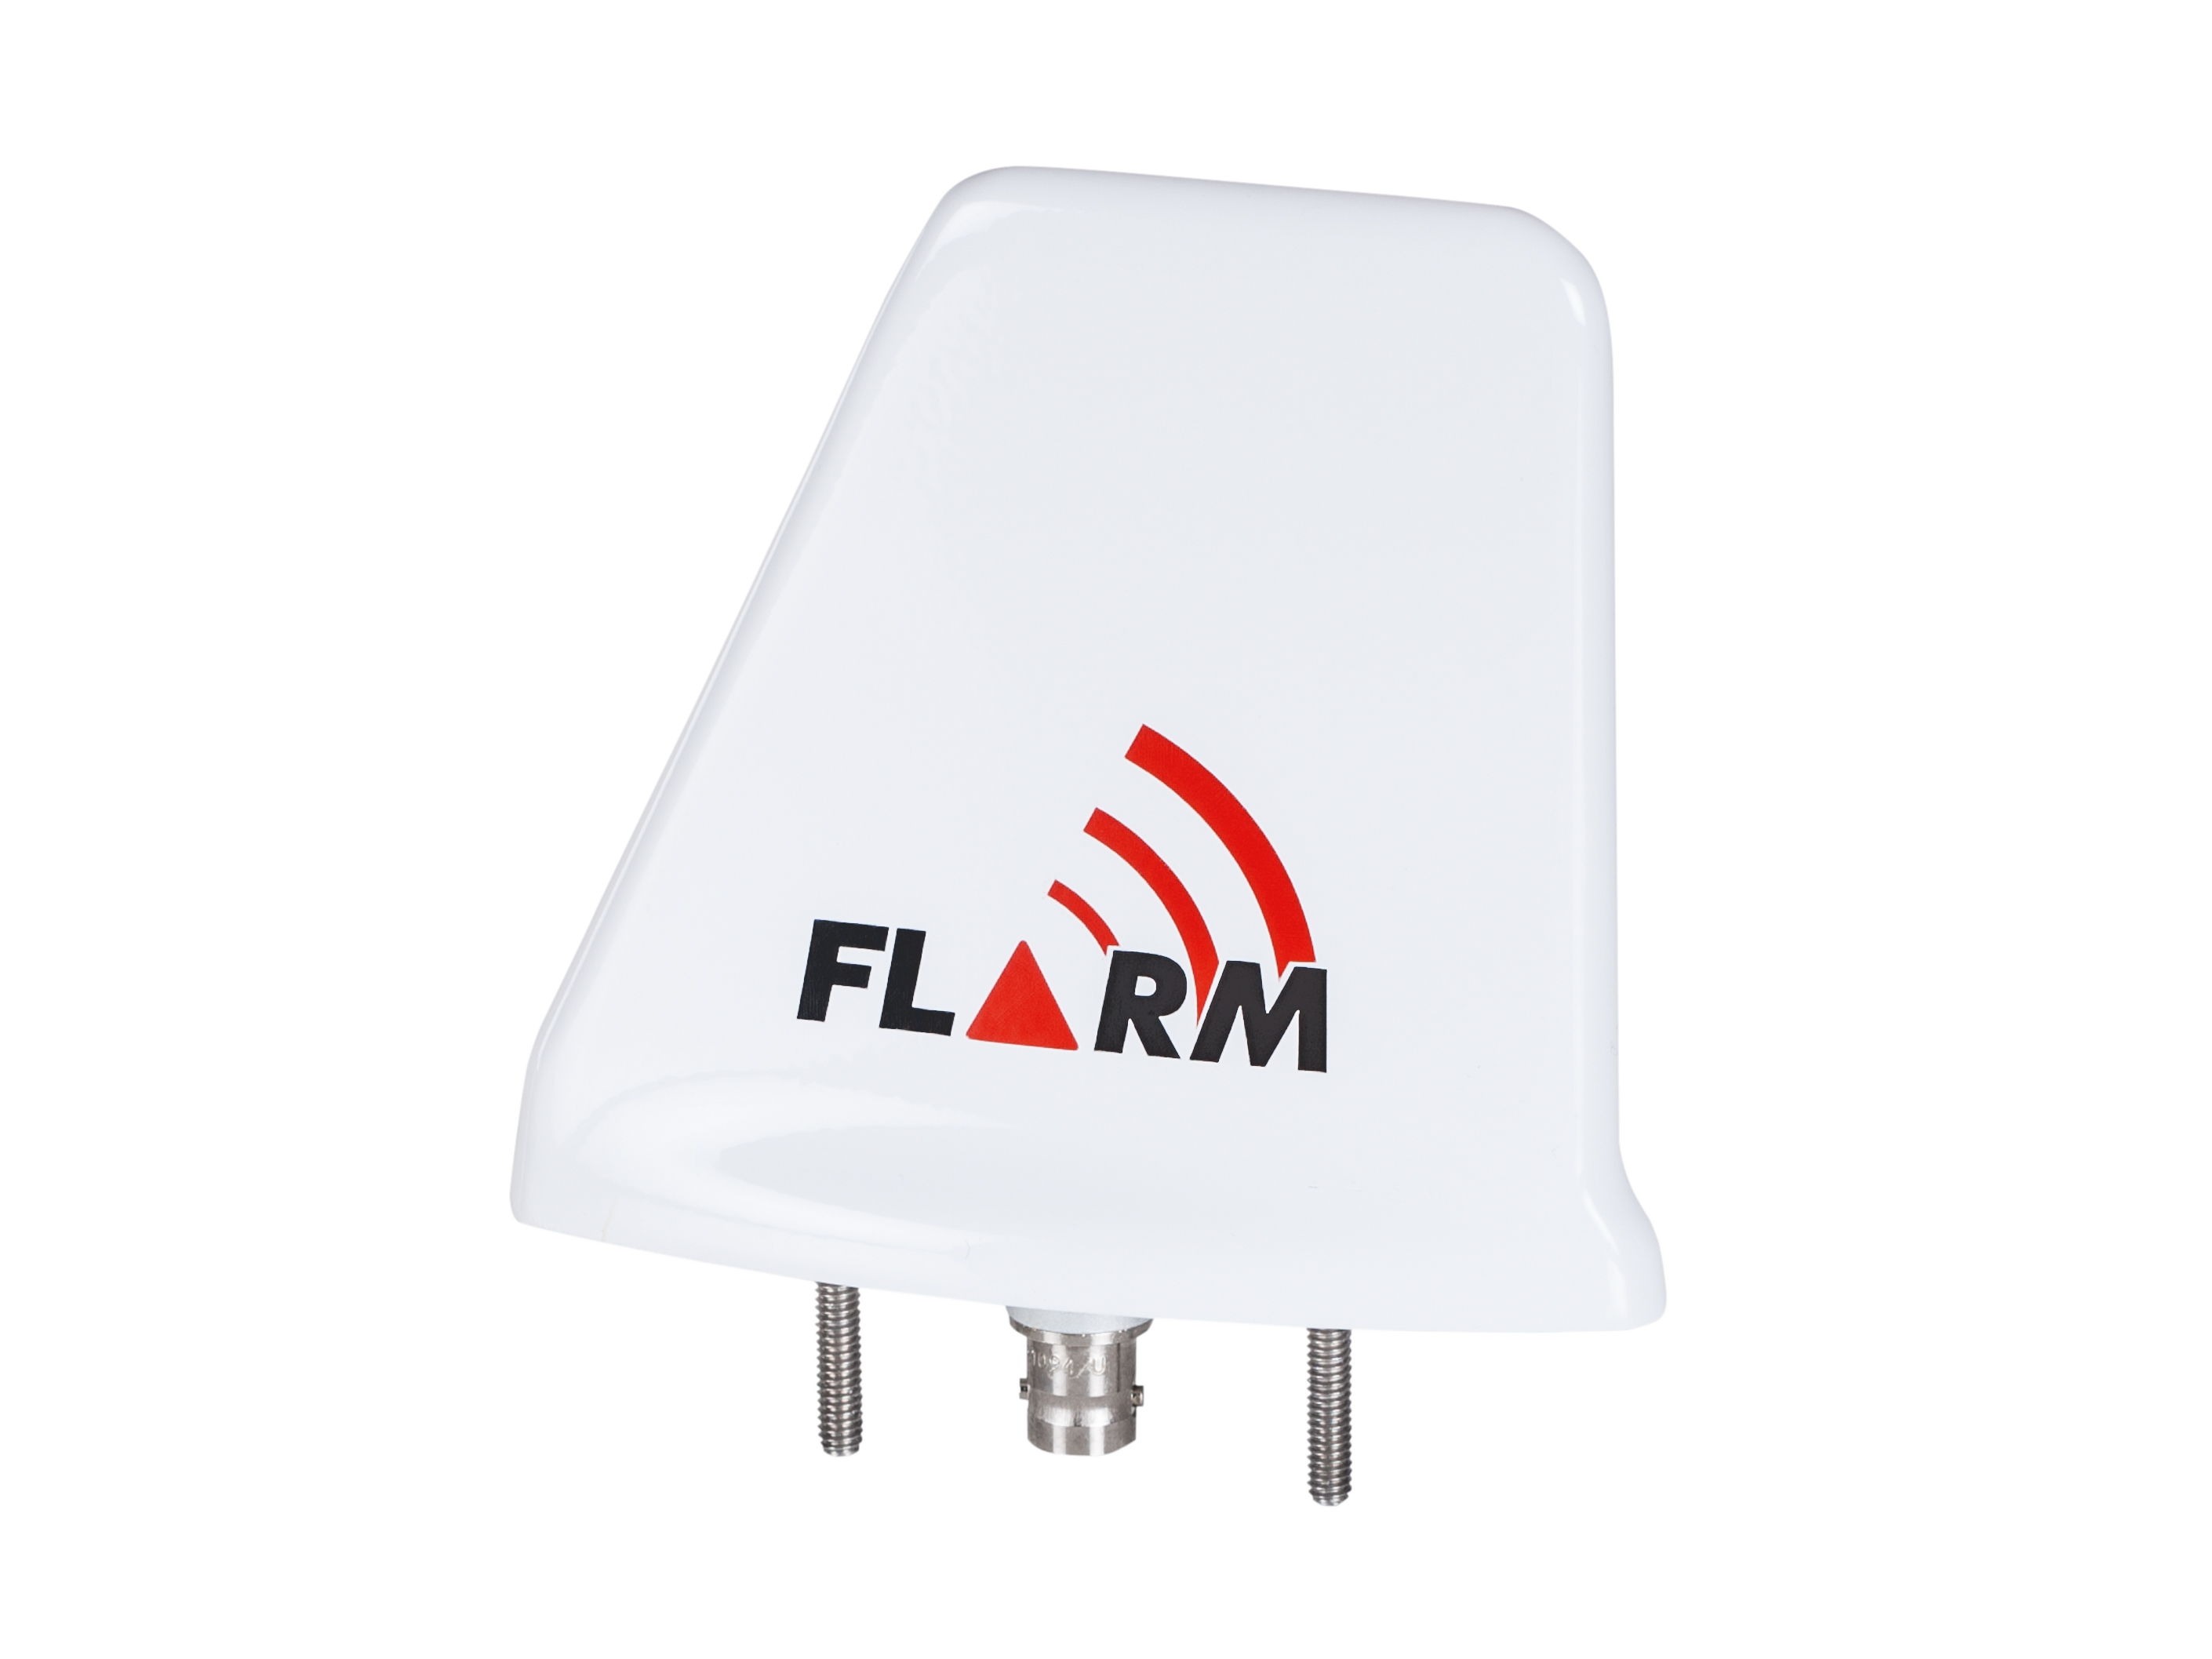 Flarm antenna